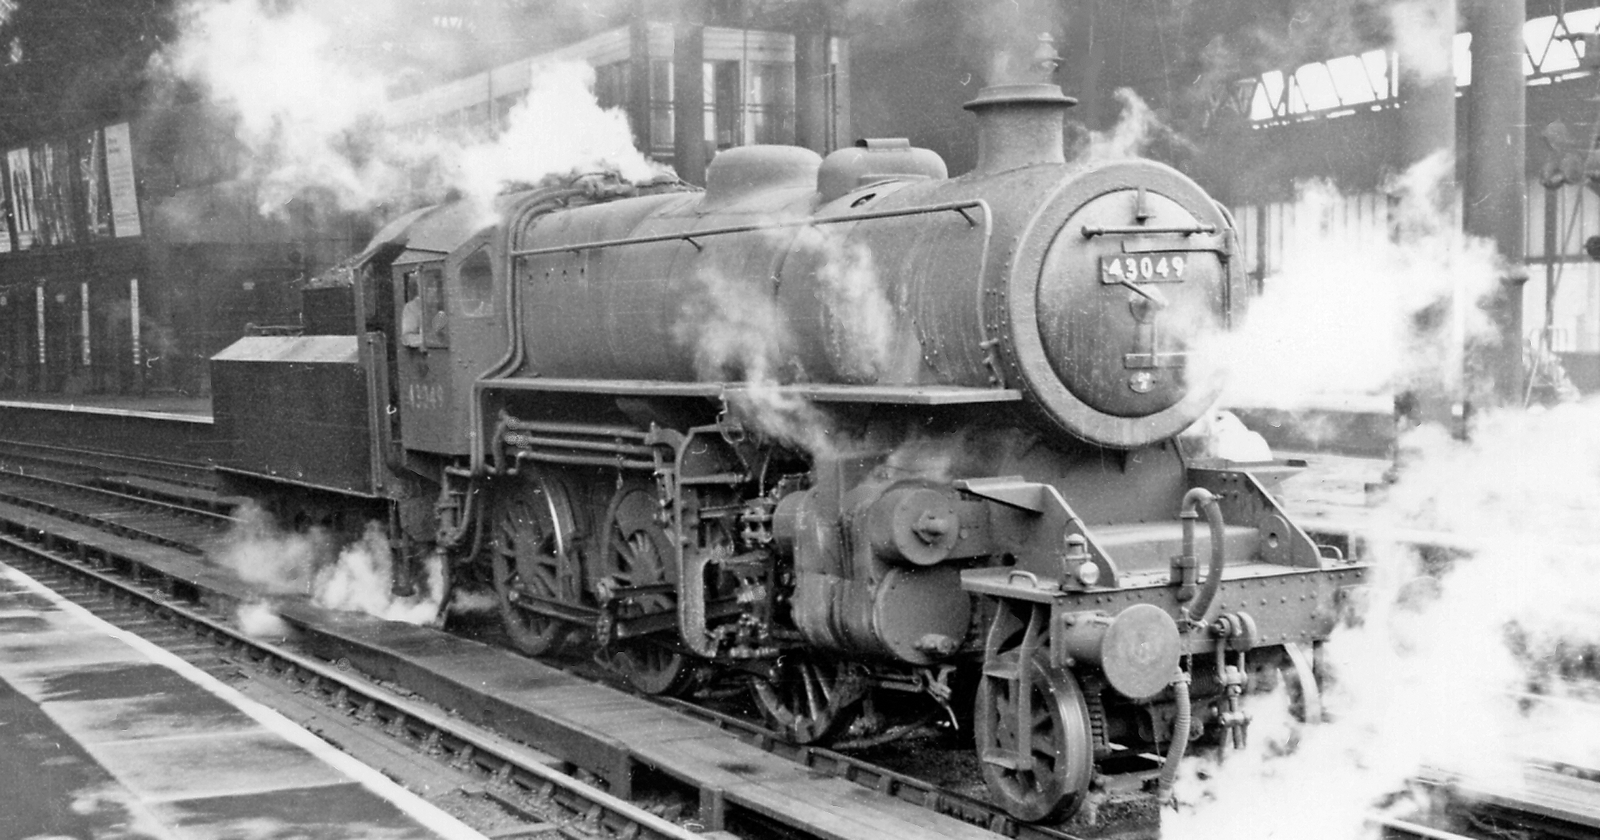 No. 43049 in October 1959 at Birmingham New Street station